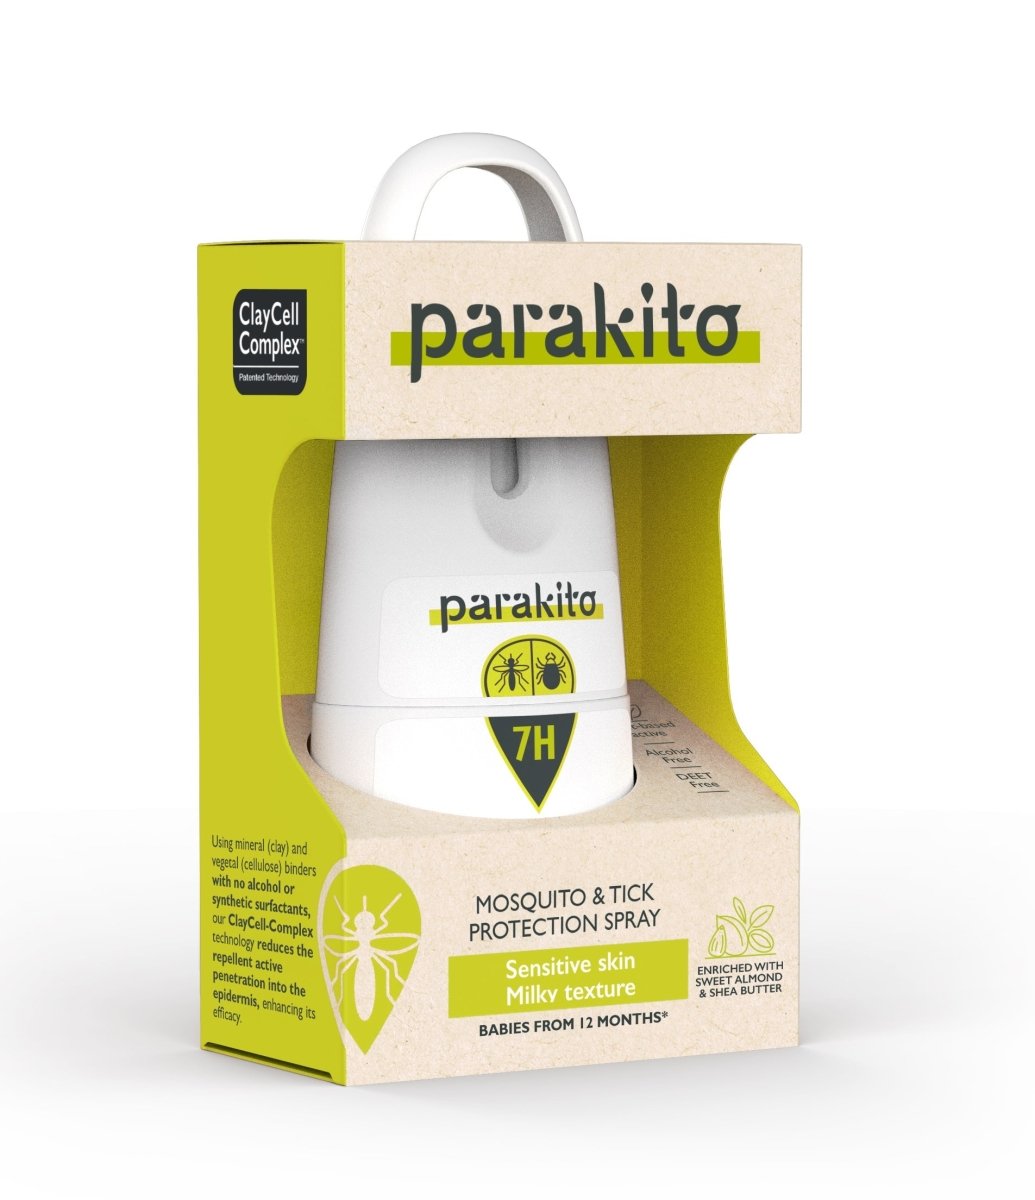 PARAKITO Mosquito & Tick Protection Spray - Sensitive Skin (Family) 防蟲驅蚊噴霧 - 低敏家庭配方 [75ml] - MINT Organics